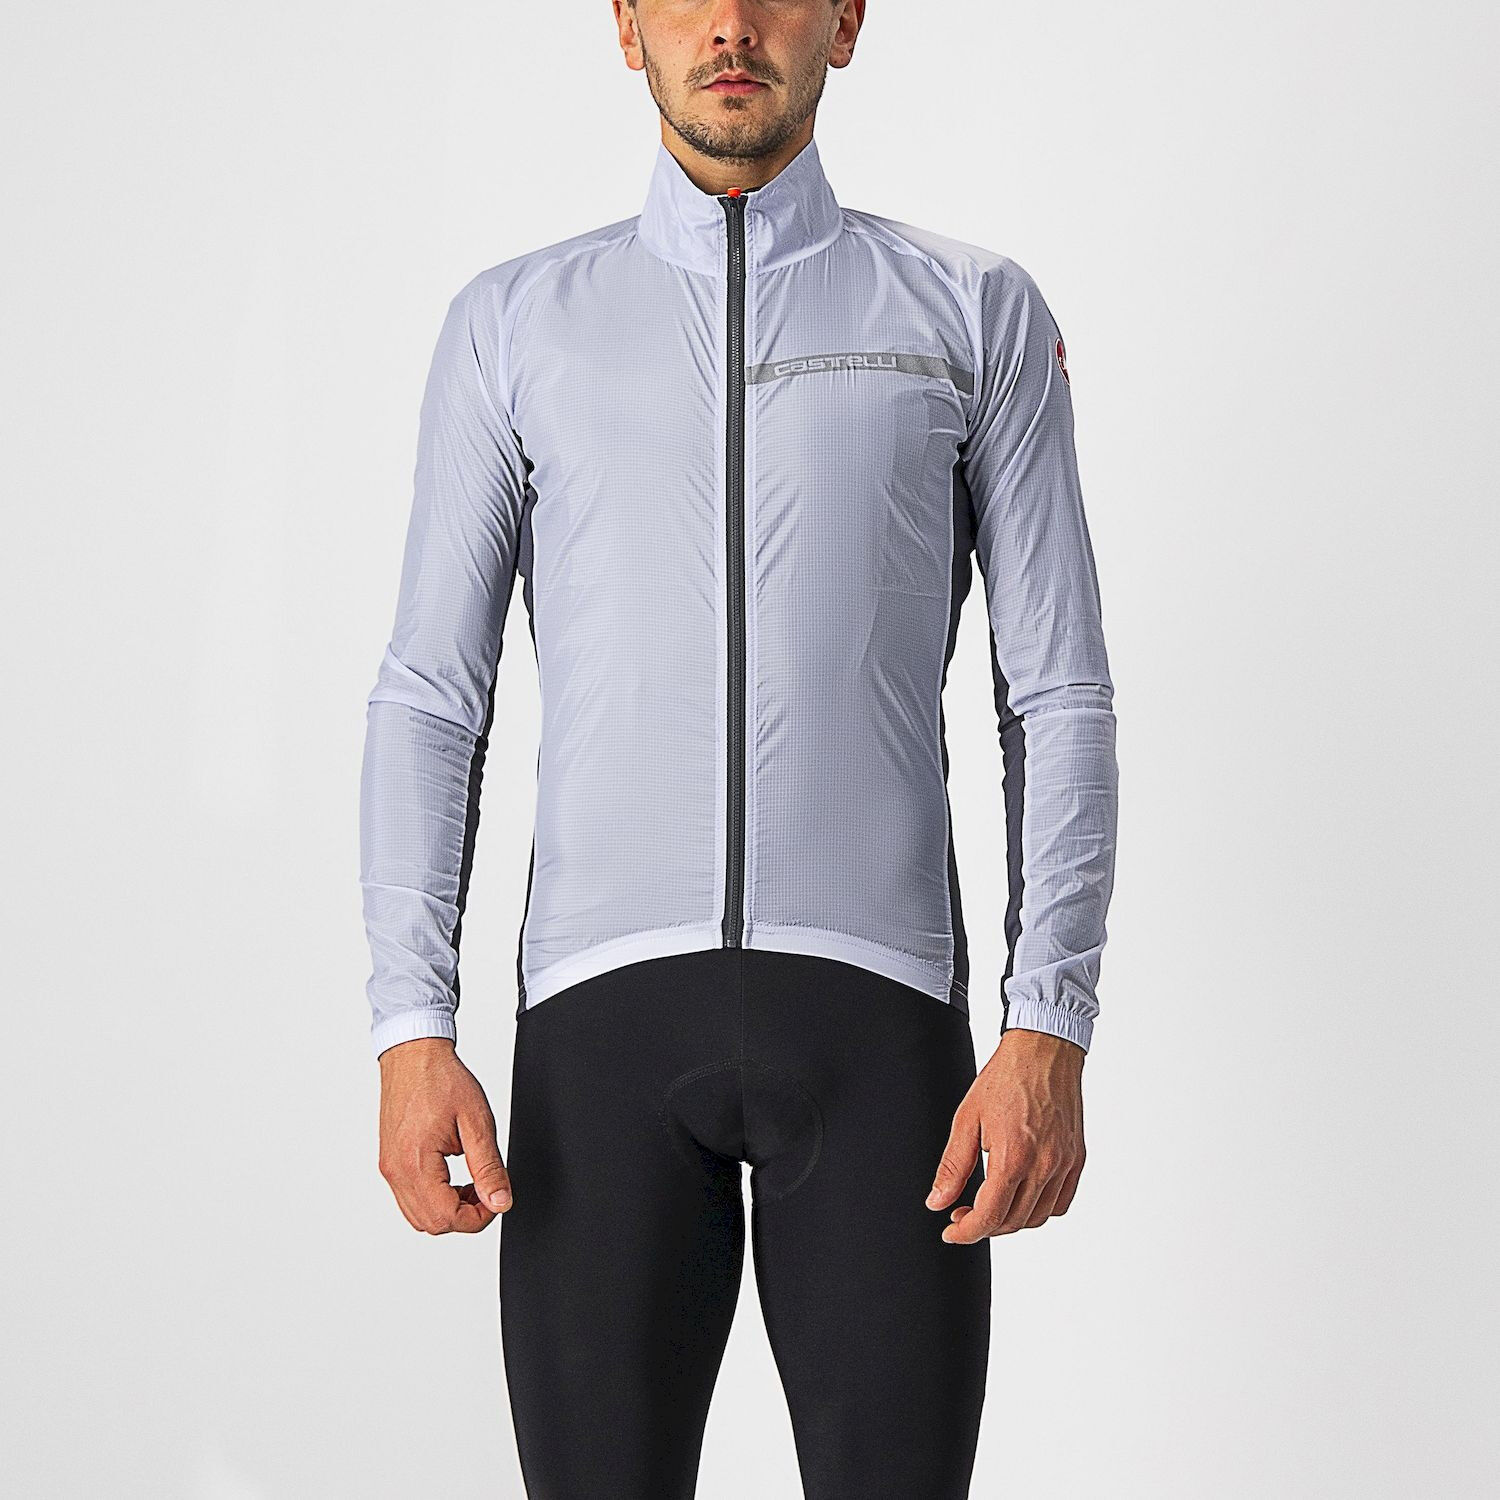 Castelli Squadra Stretch Jacket - Cycling windproof jacket - Men's